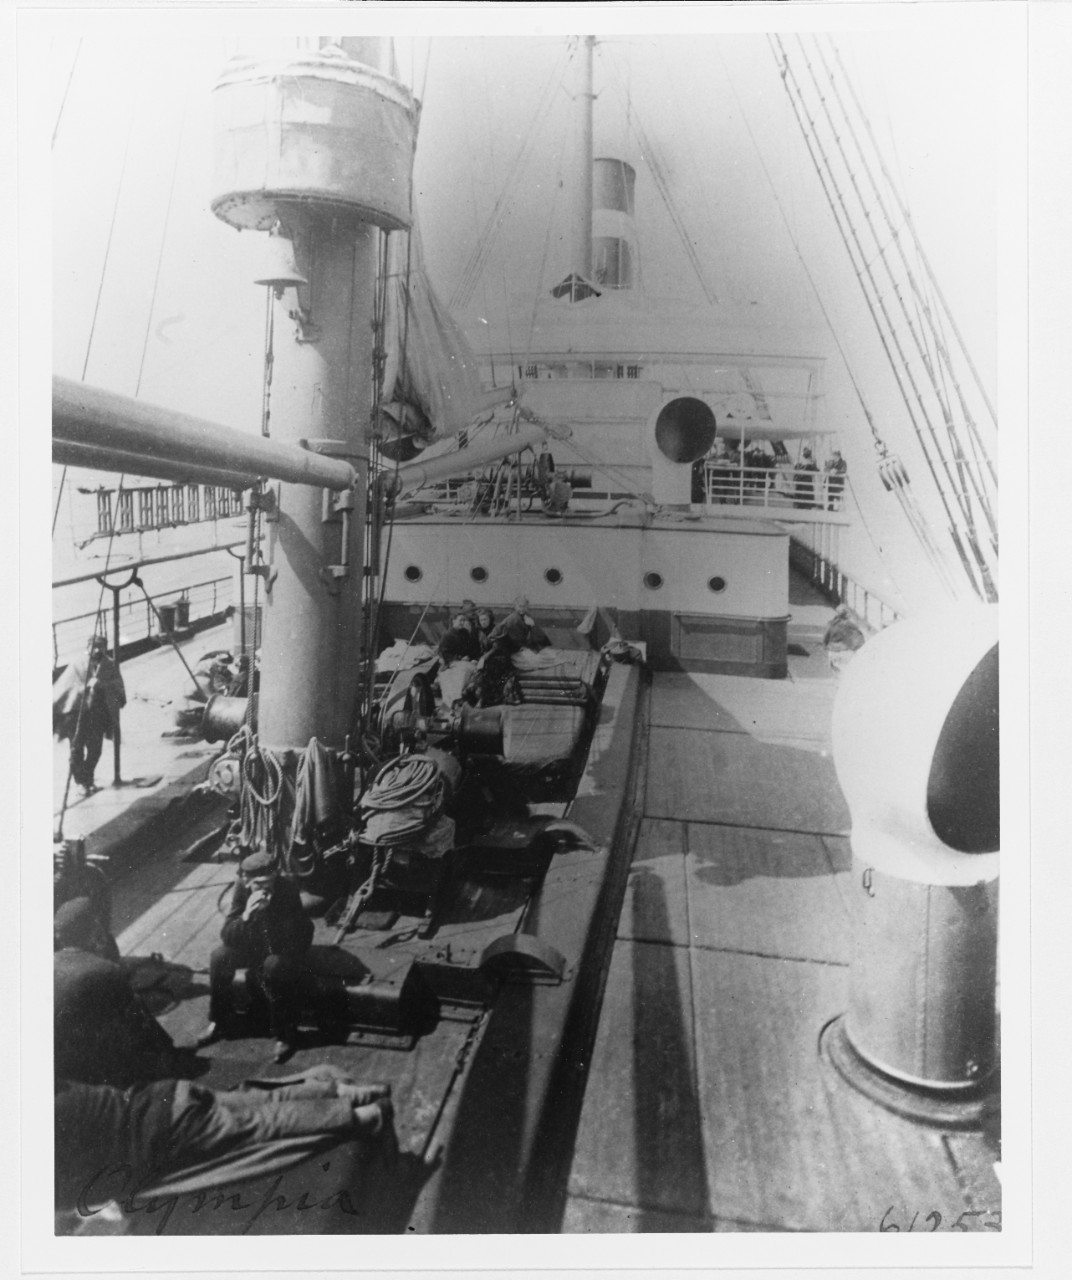 SS WAESLAND (U.S. passenger ship, 1867-1902)